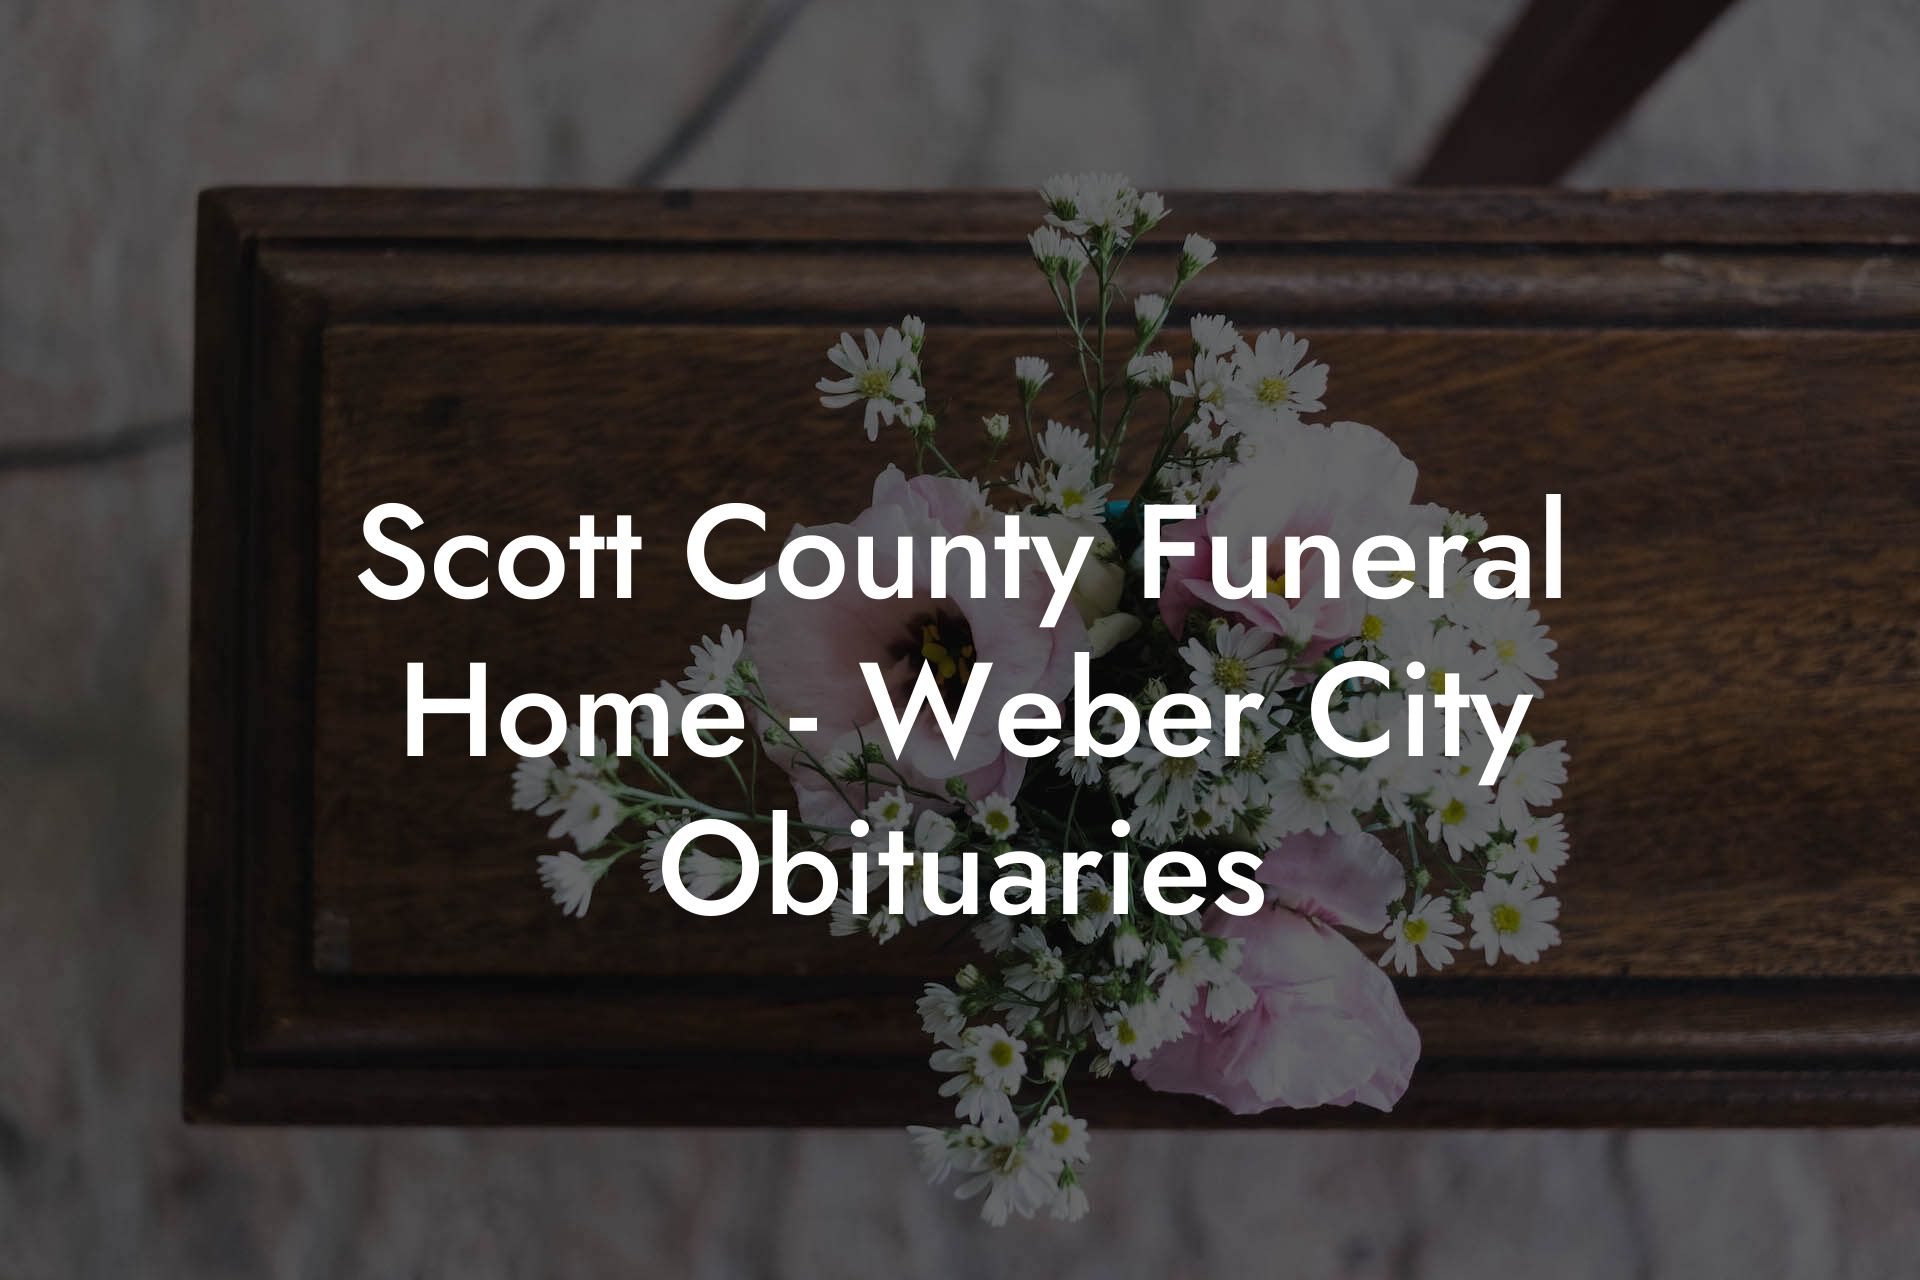 Scott County Funeral Home - Weber City Obituaries